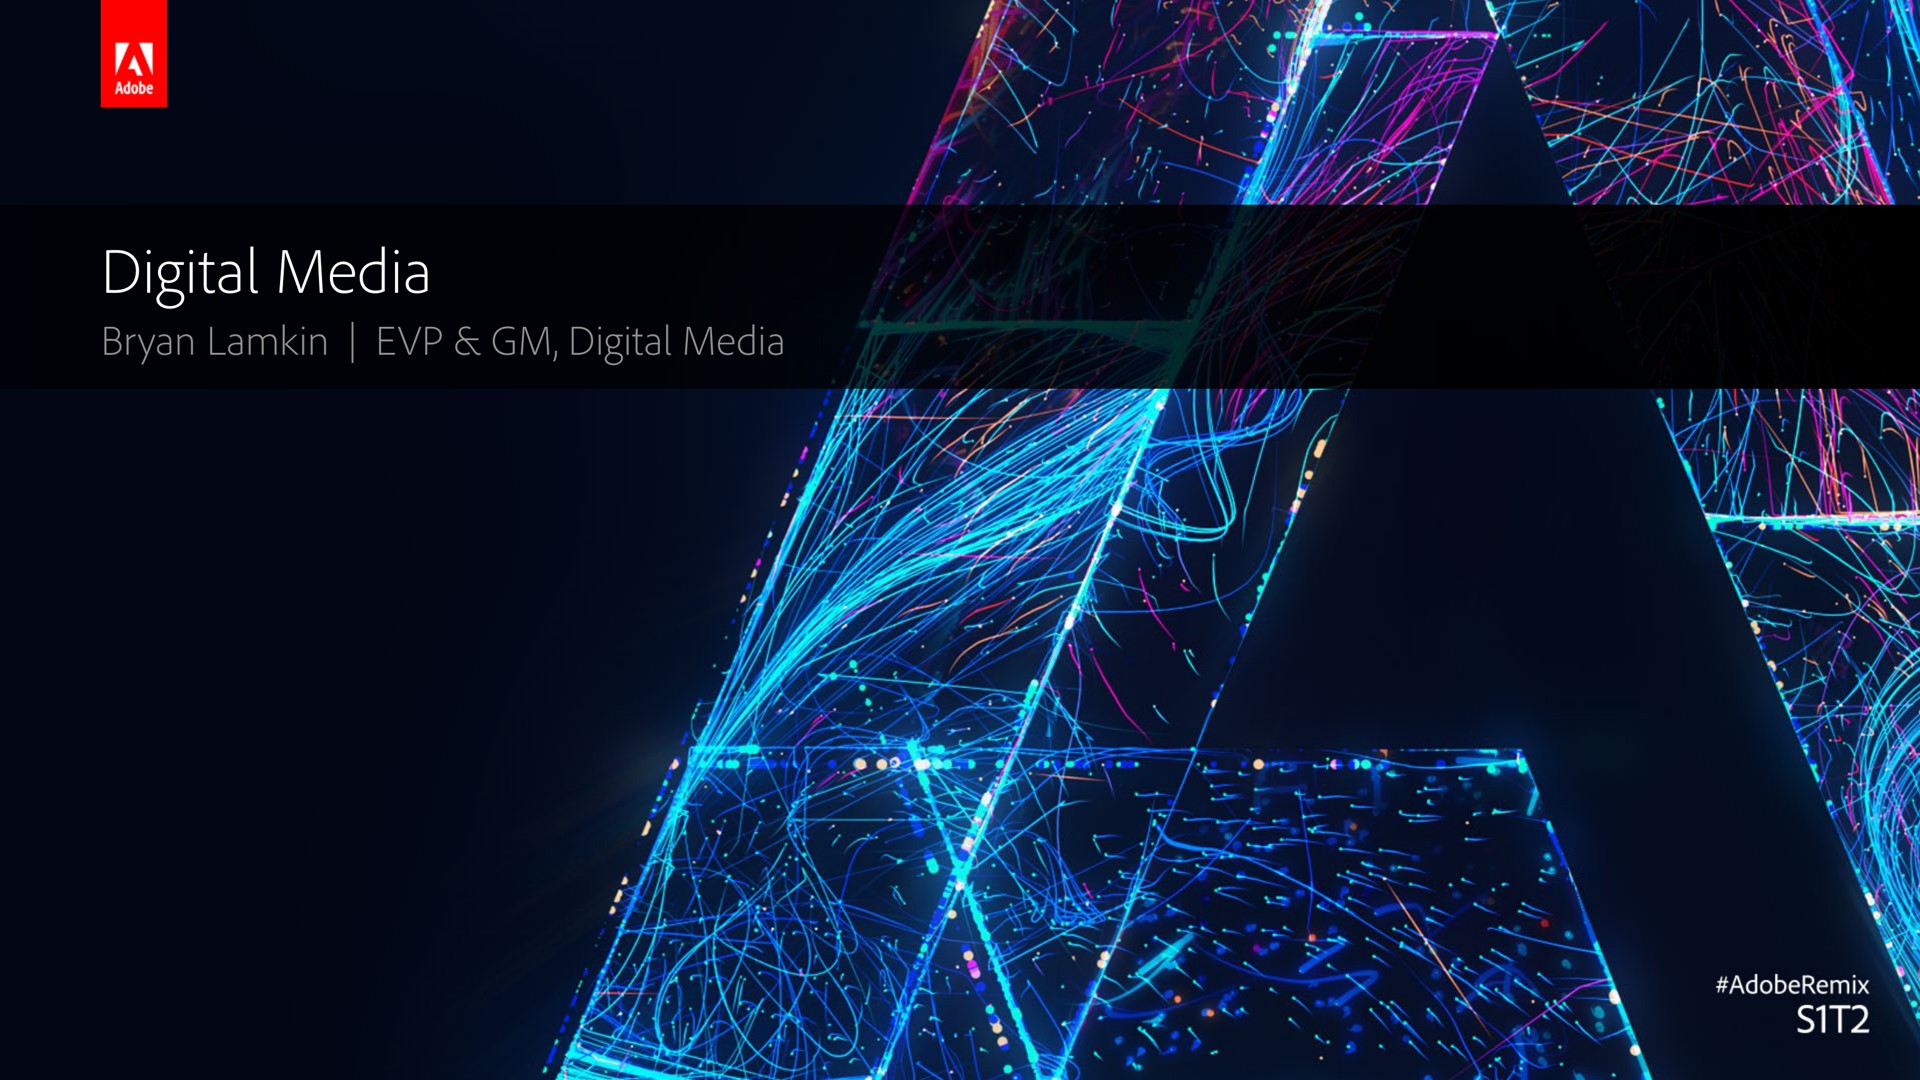 digital media a ads | Adobe